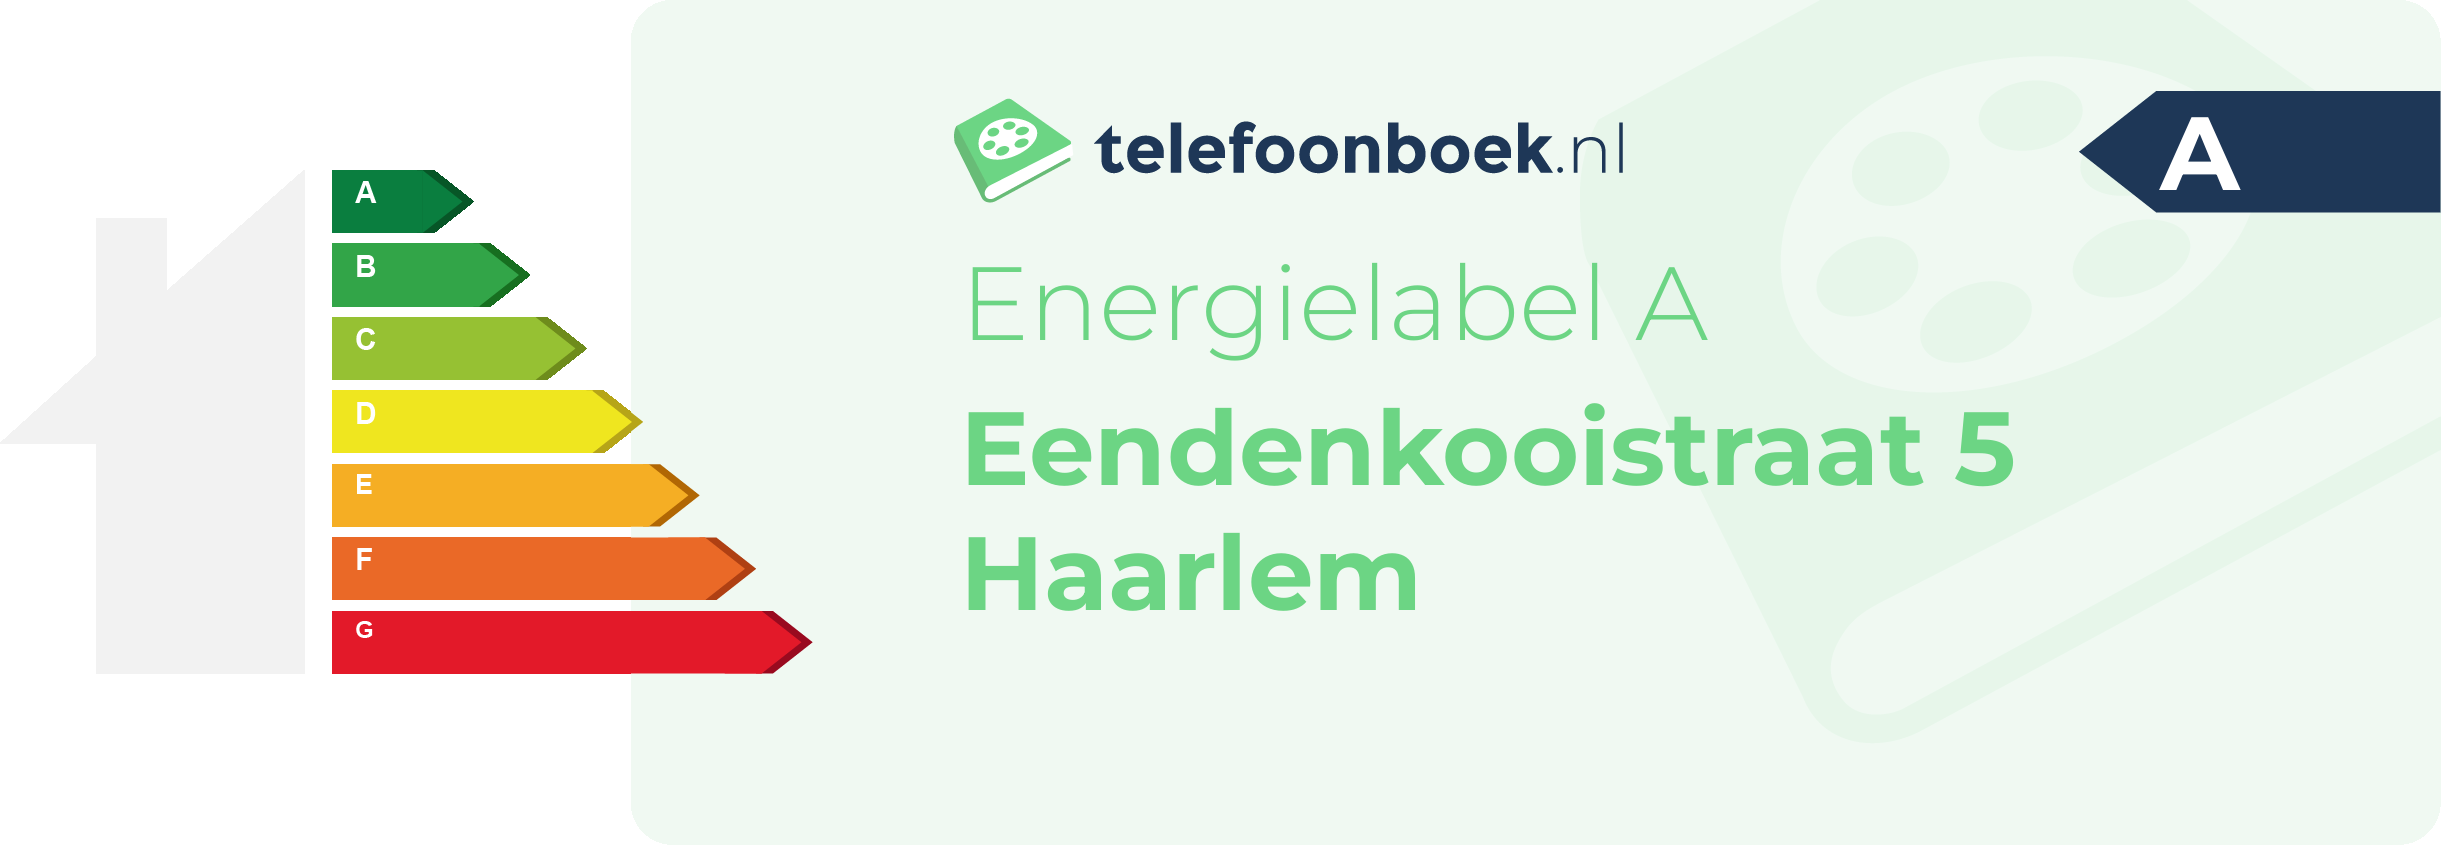 Energielabel Eendenkooistraat 5 Haarlem